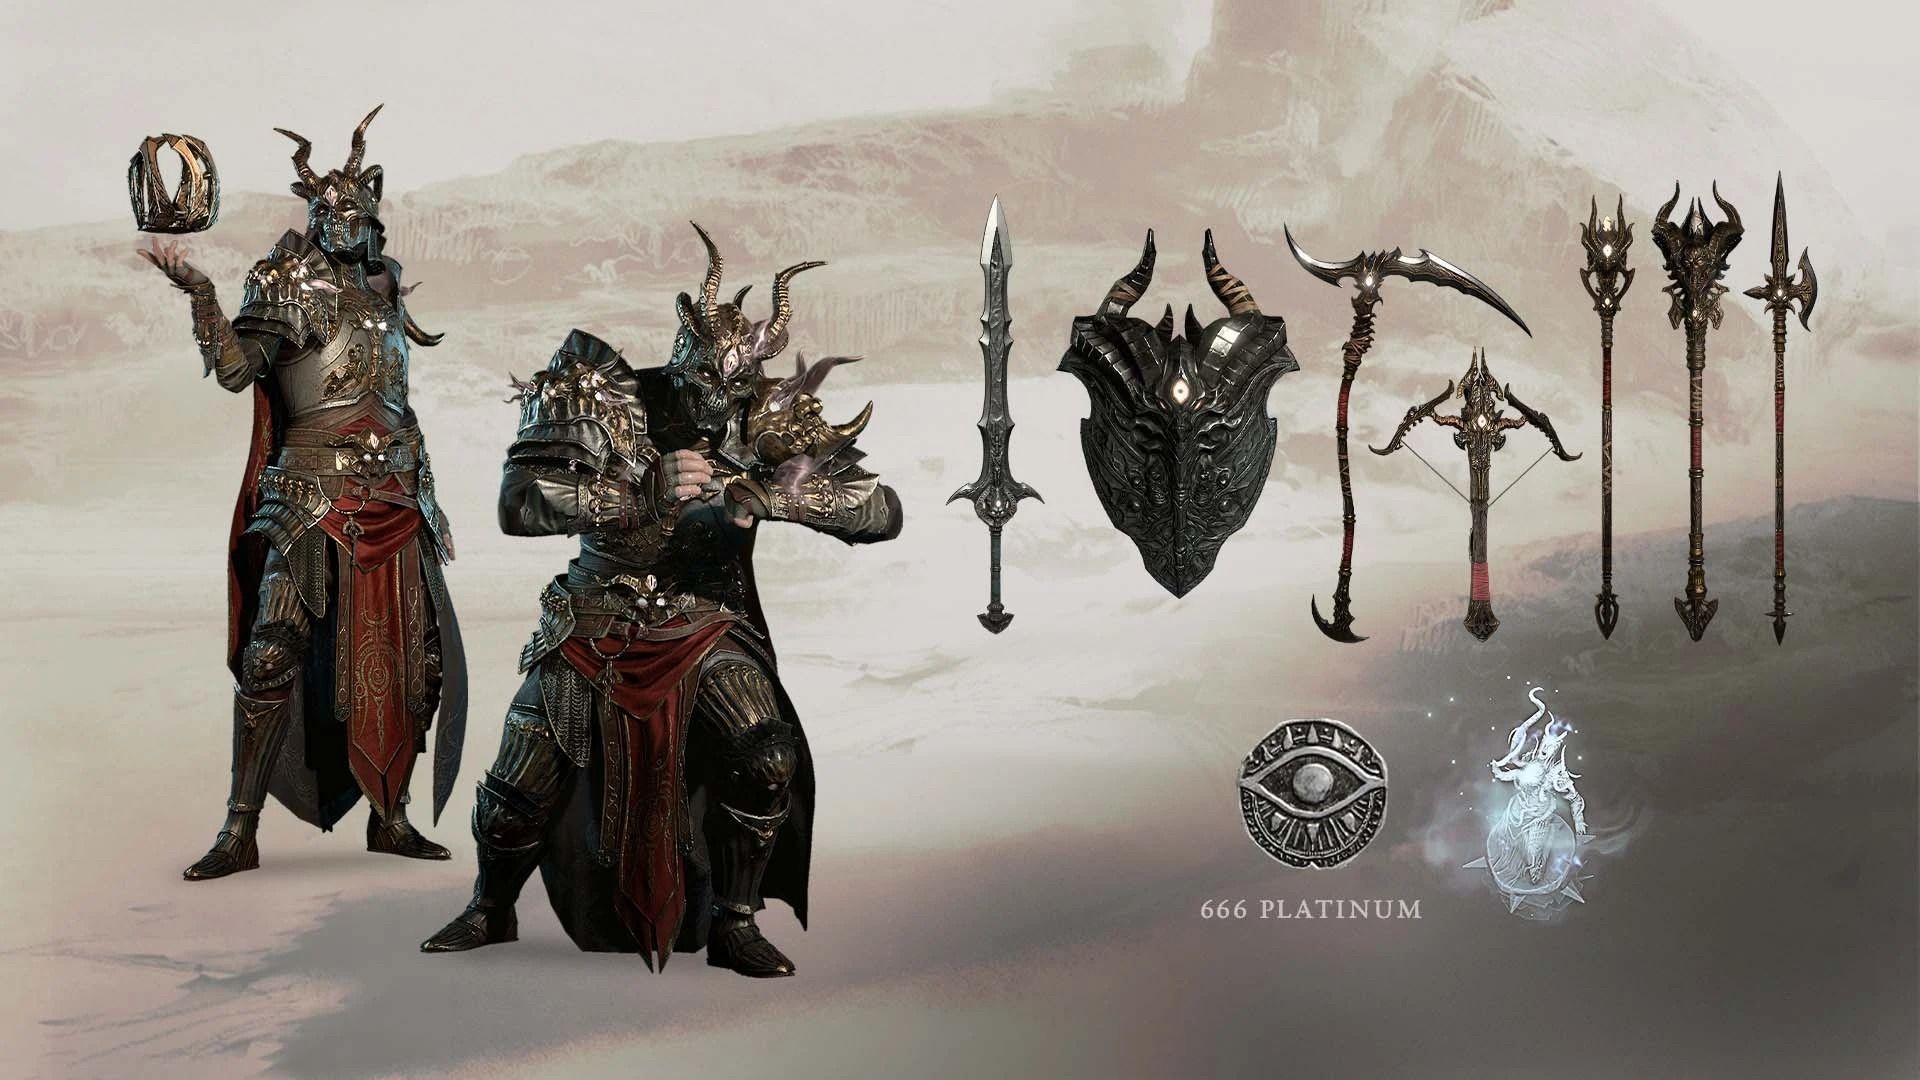 Diablo 4 Season 1 Release Date to be Announced Next Week, Blizzard Confirms